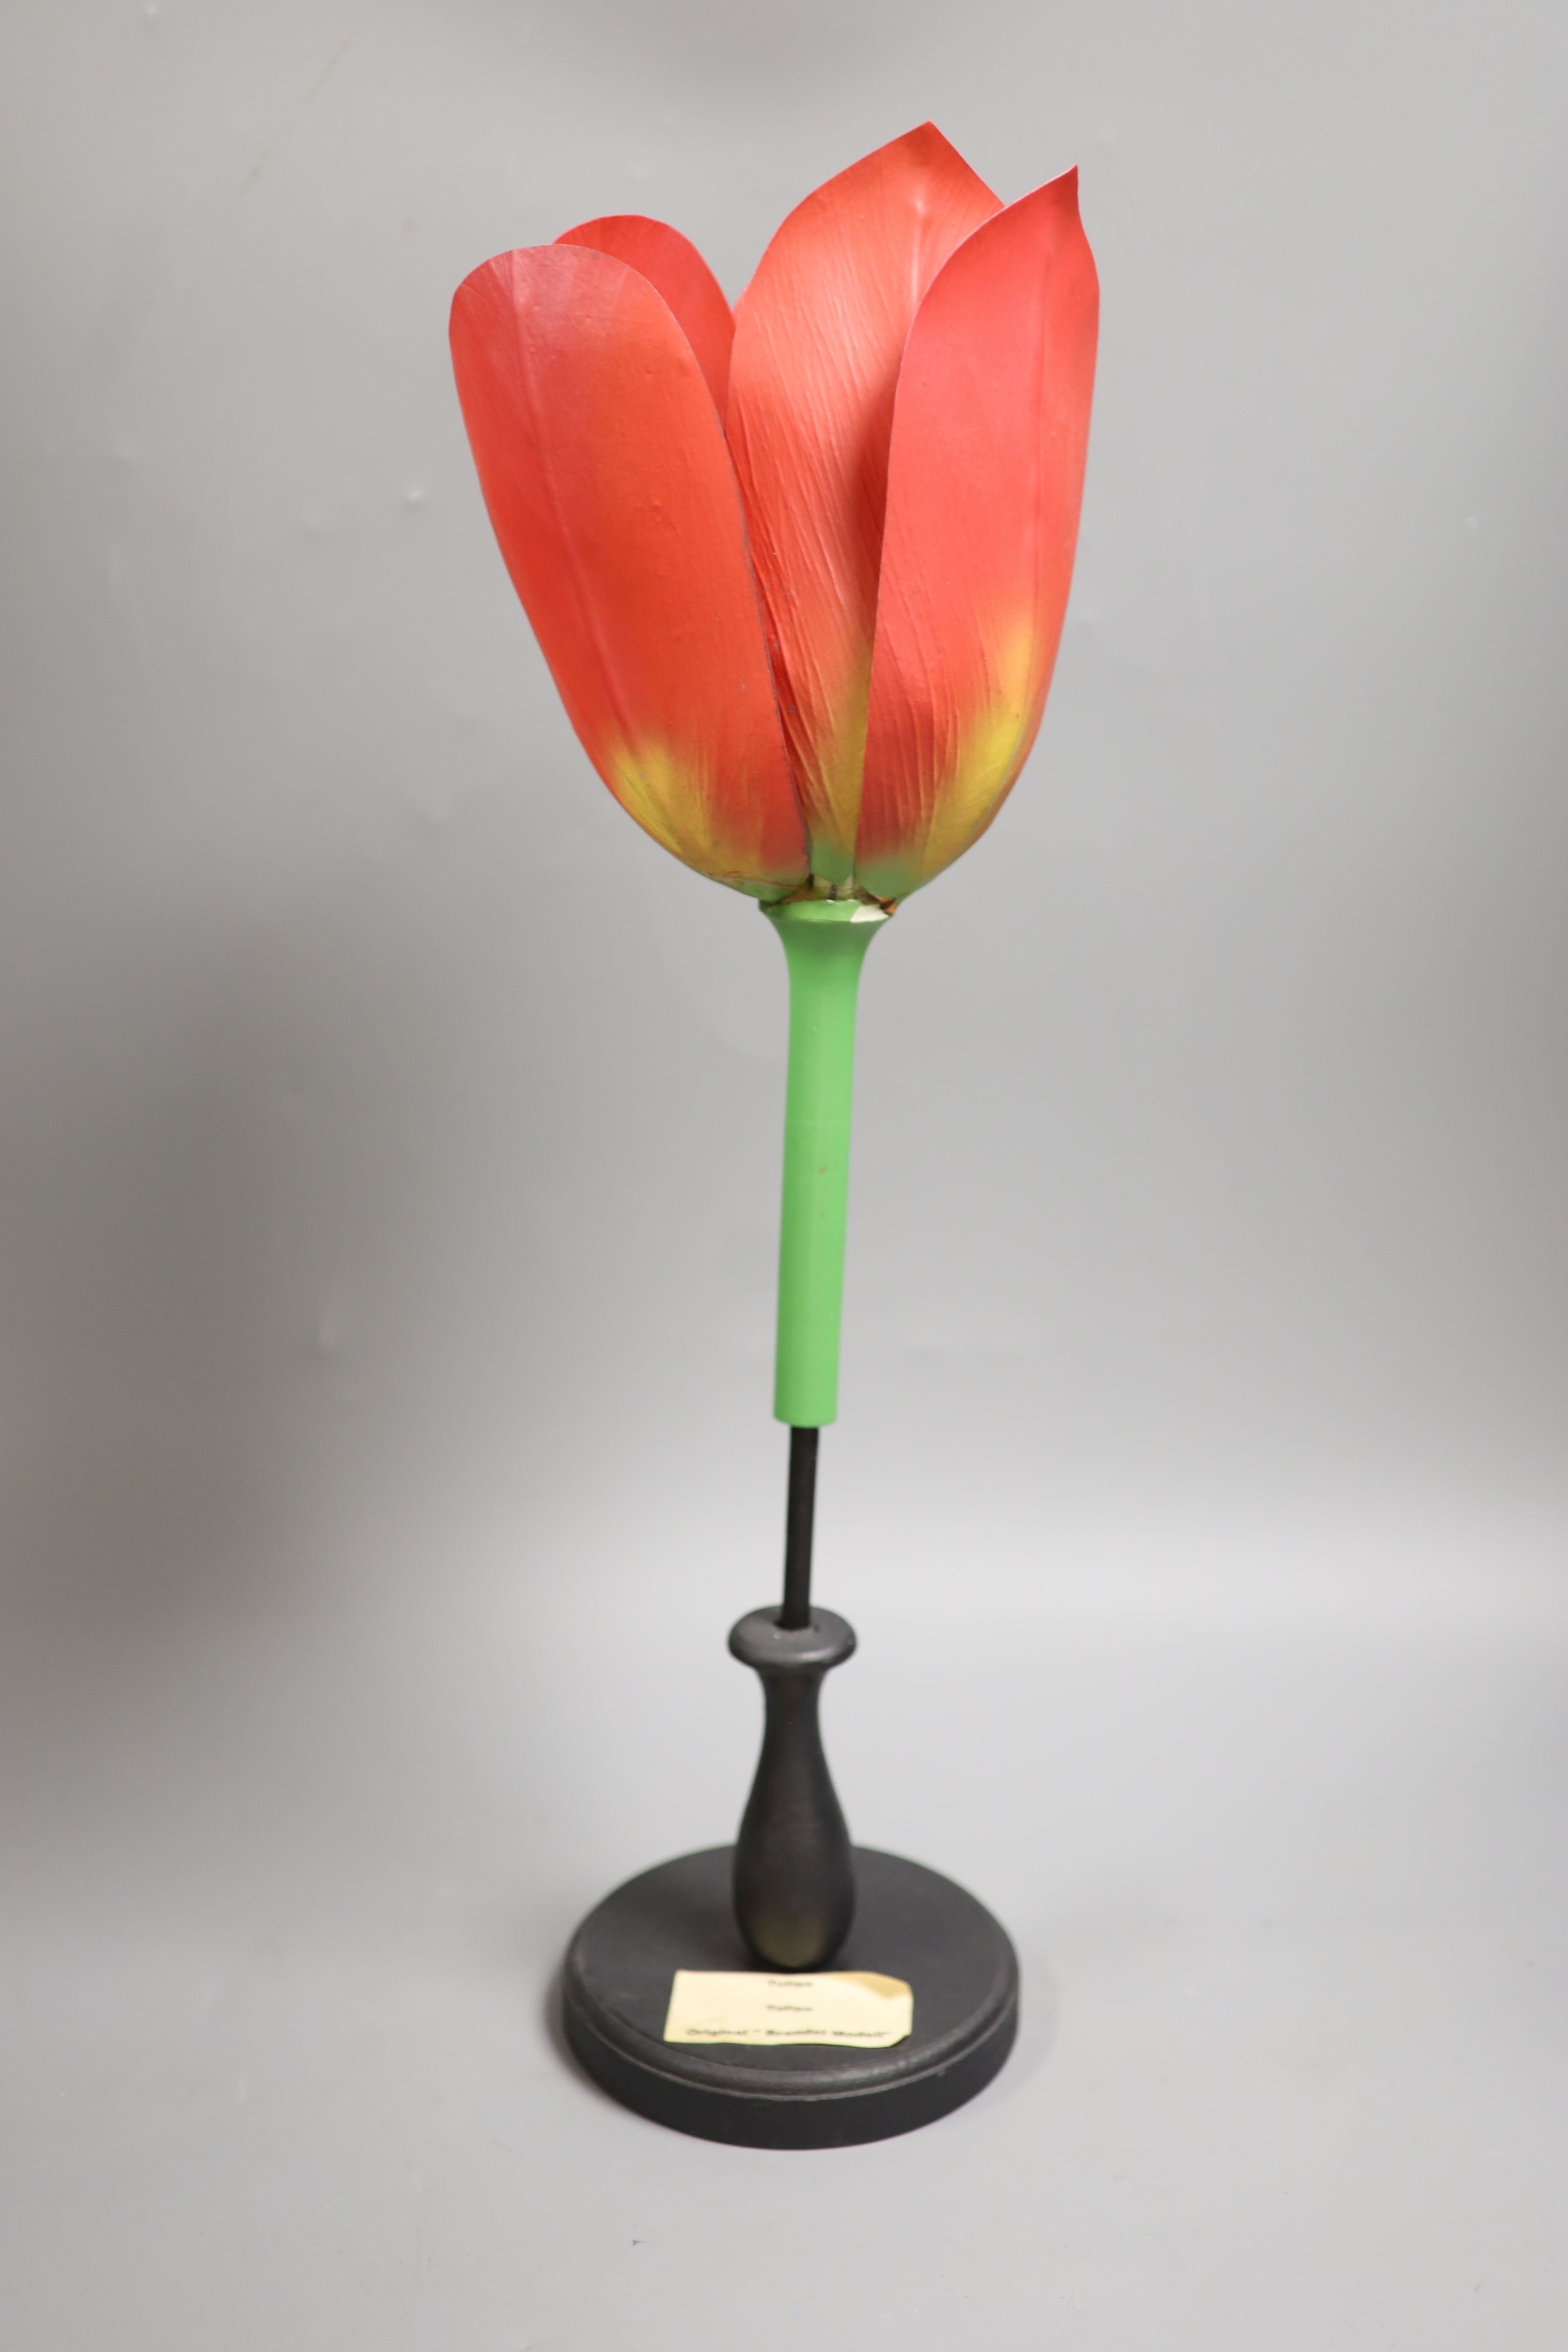 An original Brendel Modell of a tulip, 55cm high